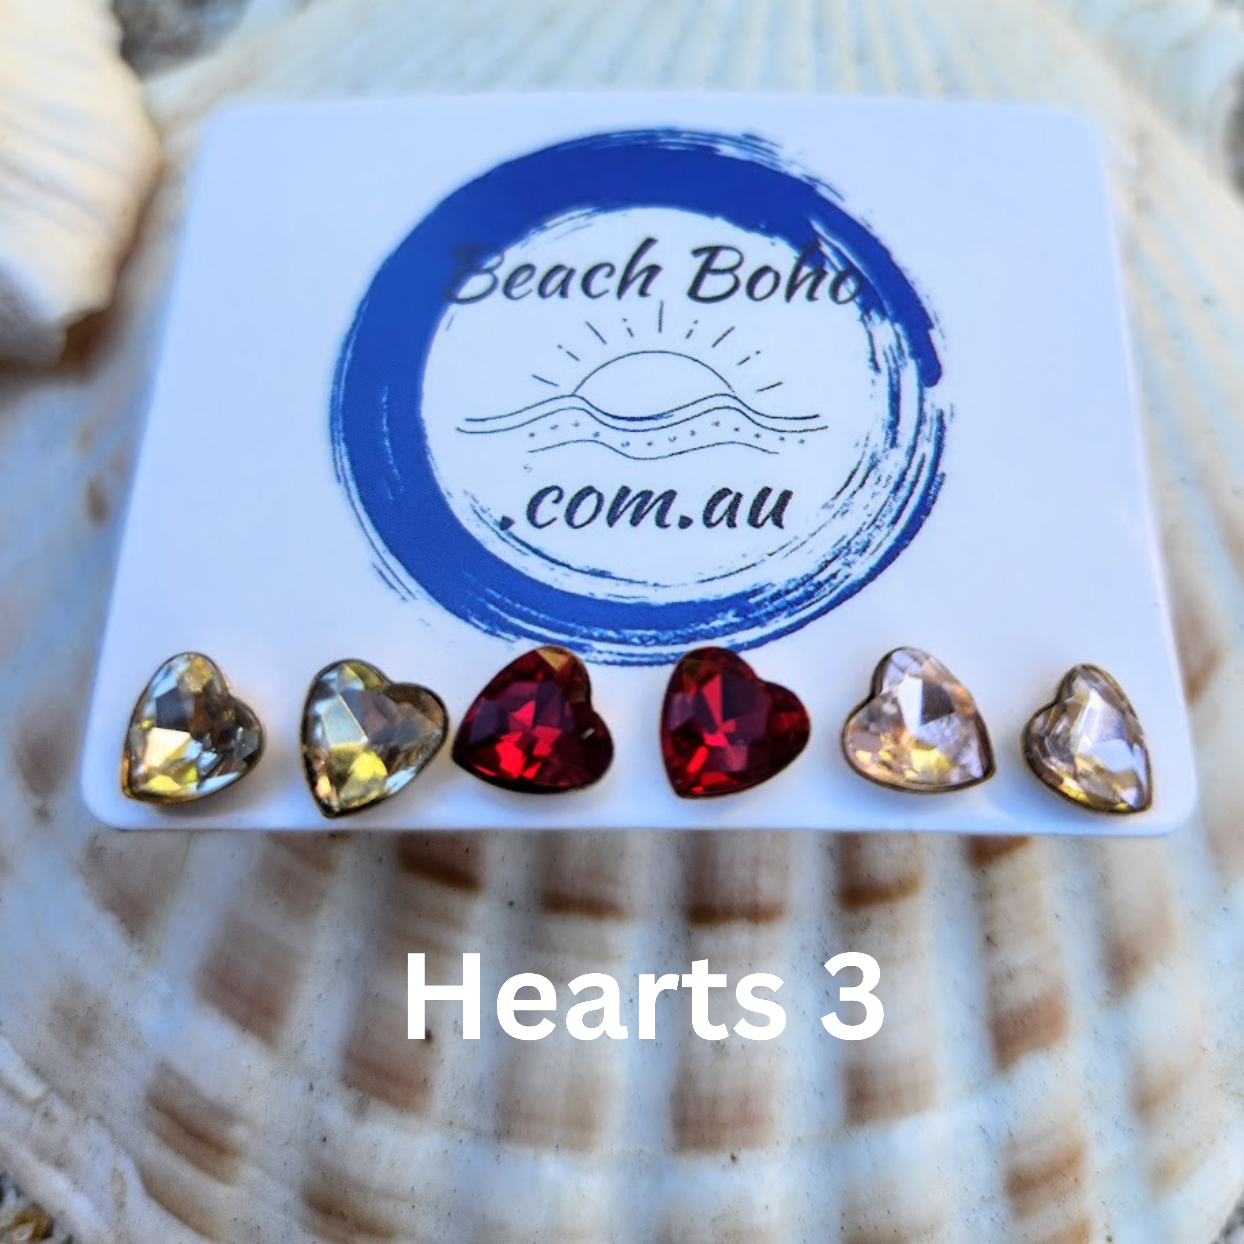 Copy of CRYSTAL TRIANGLES -  18K GOLD WATERPROOF CUBIC ZIRCONIA STUD EARRINGS - Premium earrings from www.beachboho.com.au - Just $60! Shop now at www.beachboho.com.au